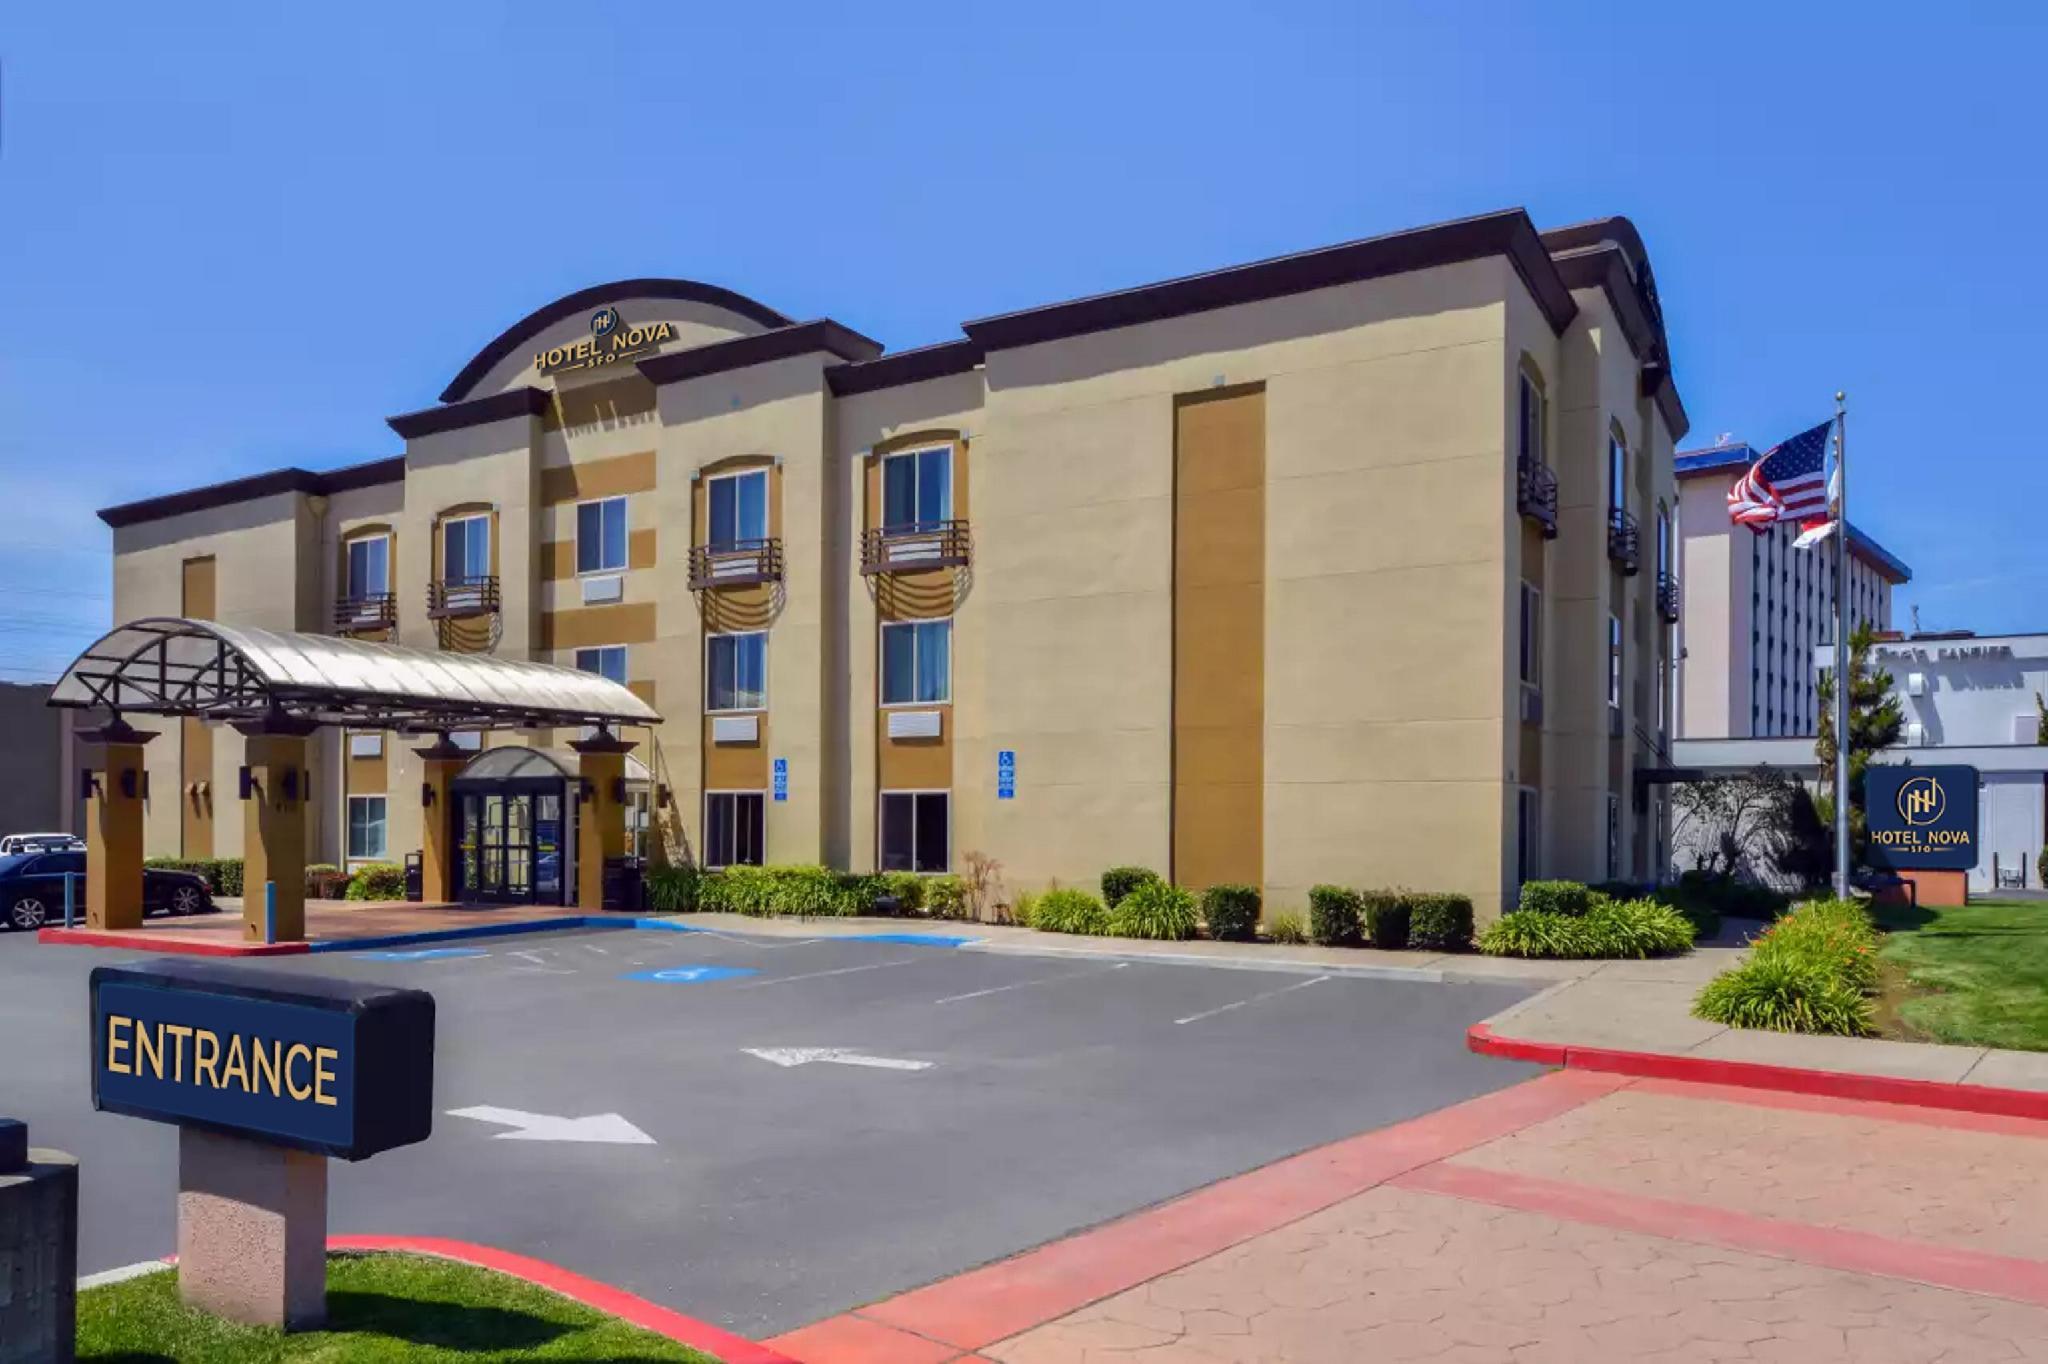 Hotel Nova Sfo - A Fairbridge Hotel - Pacífica, CA